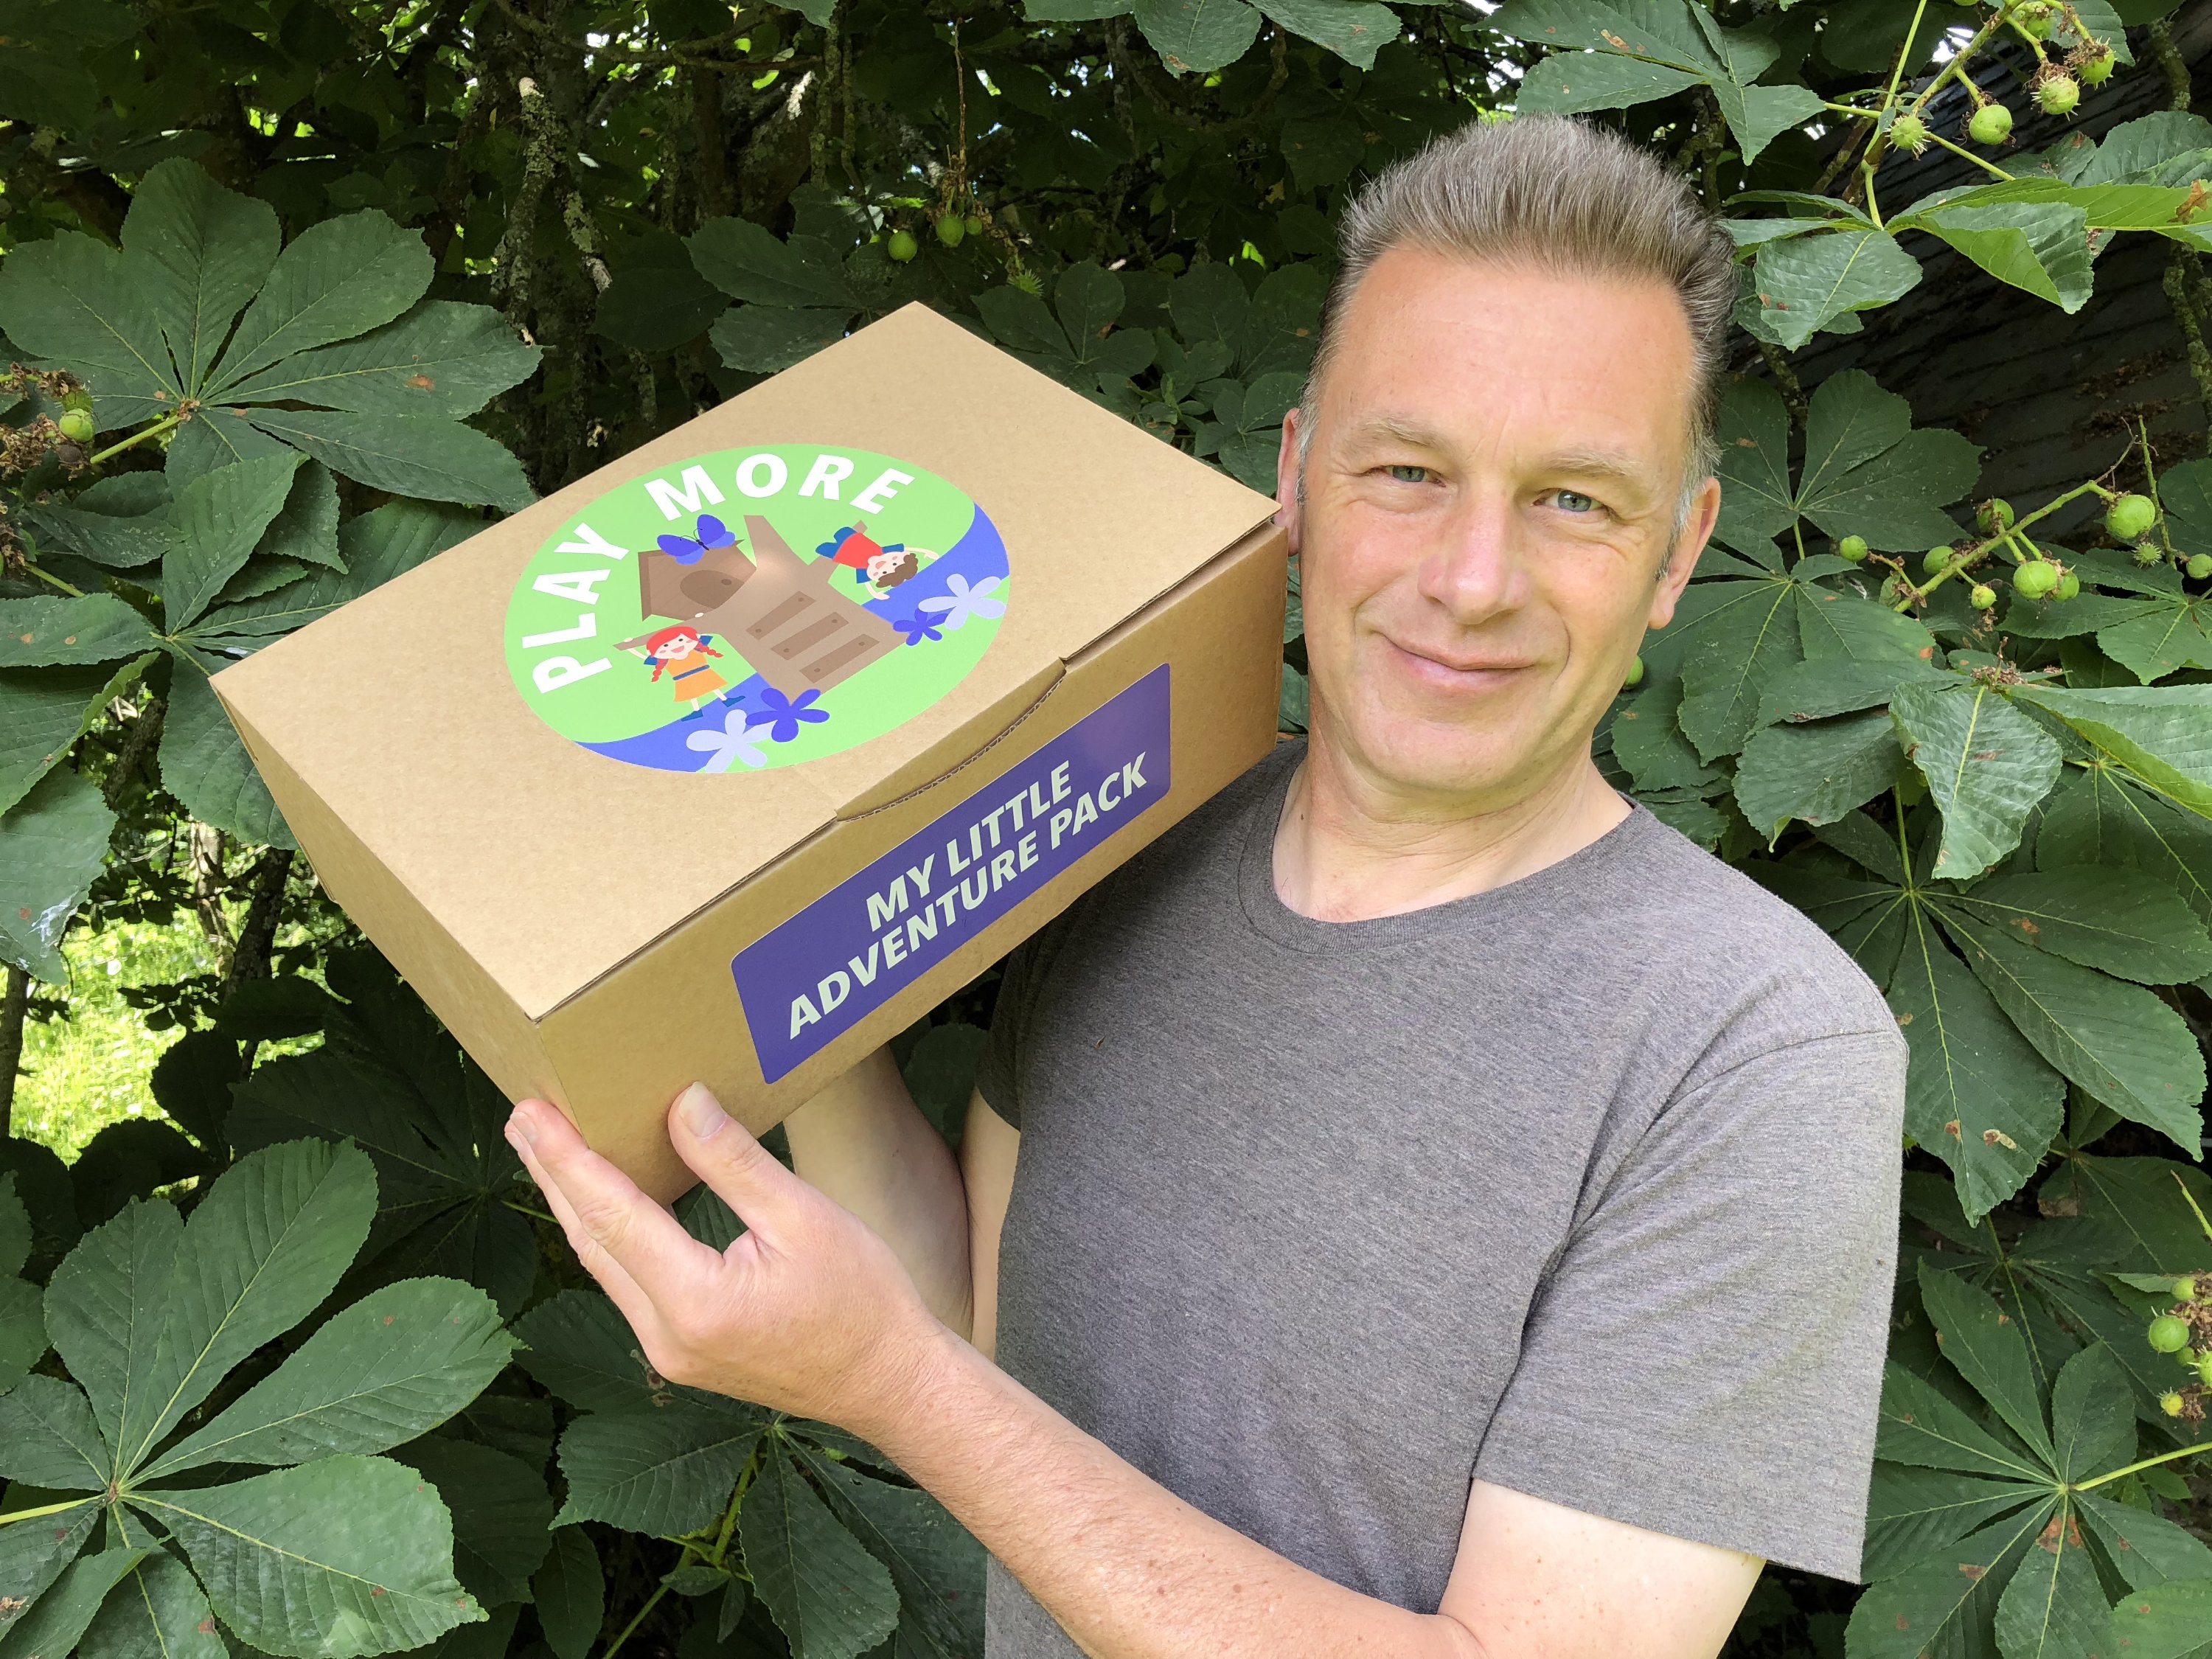 Chris Packham holding a Play More box